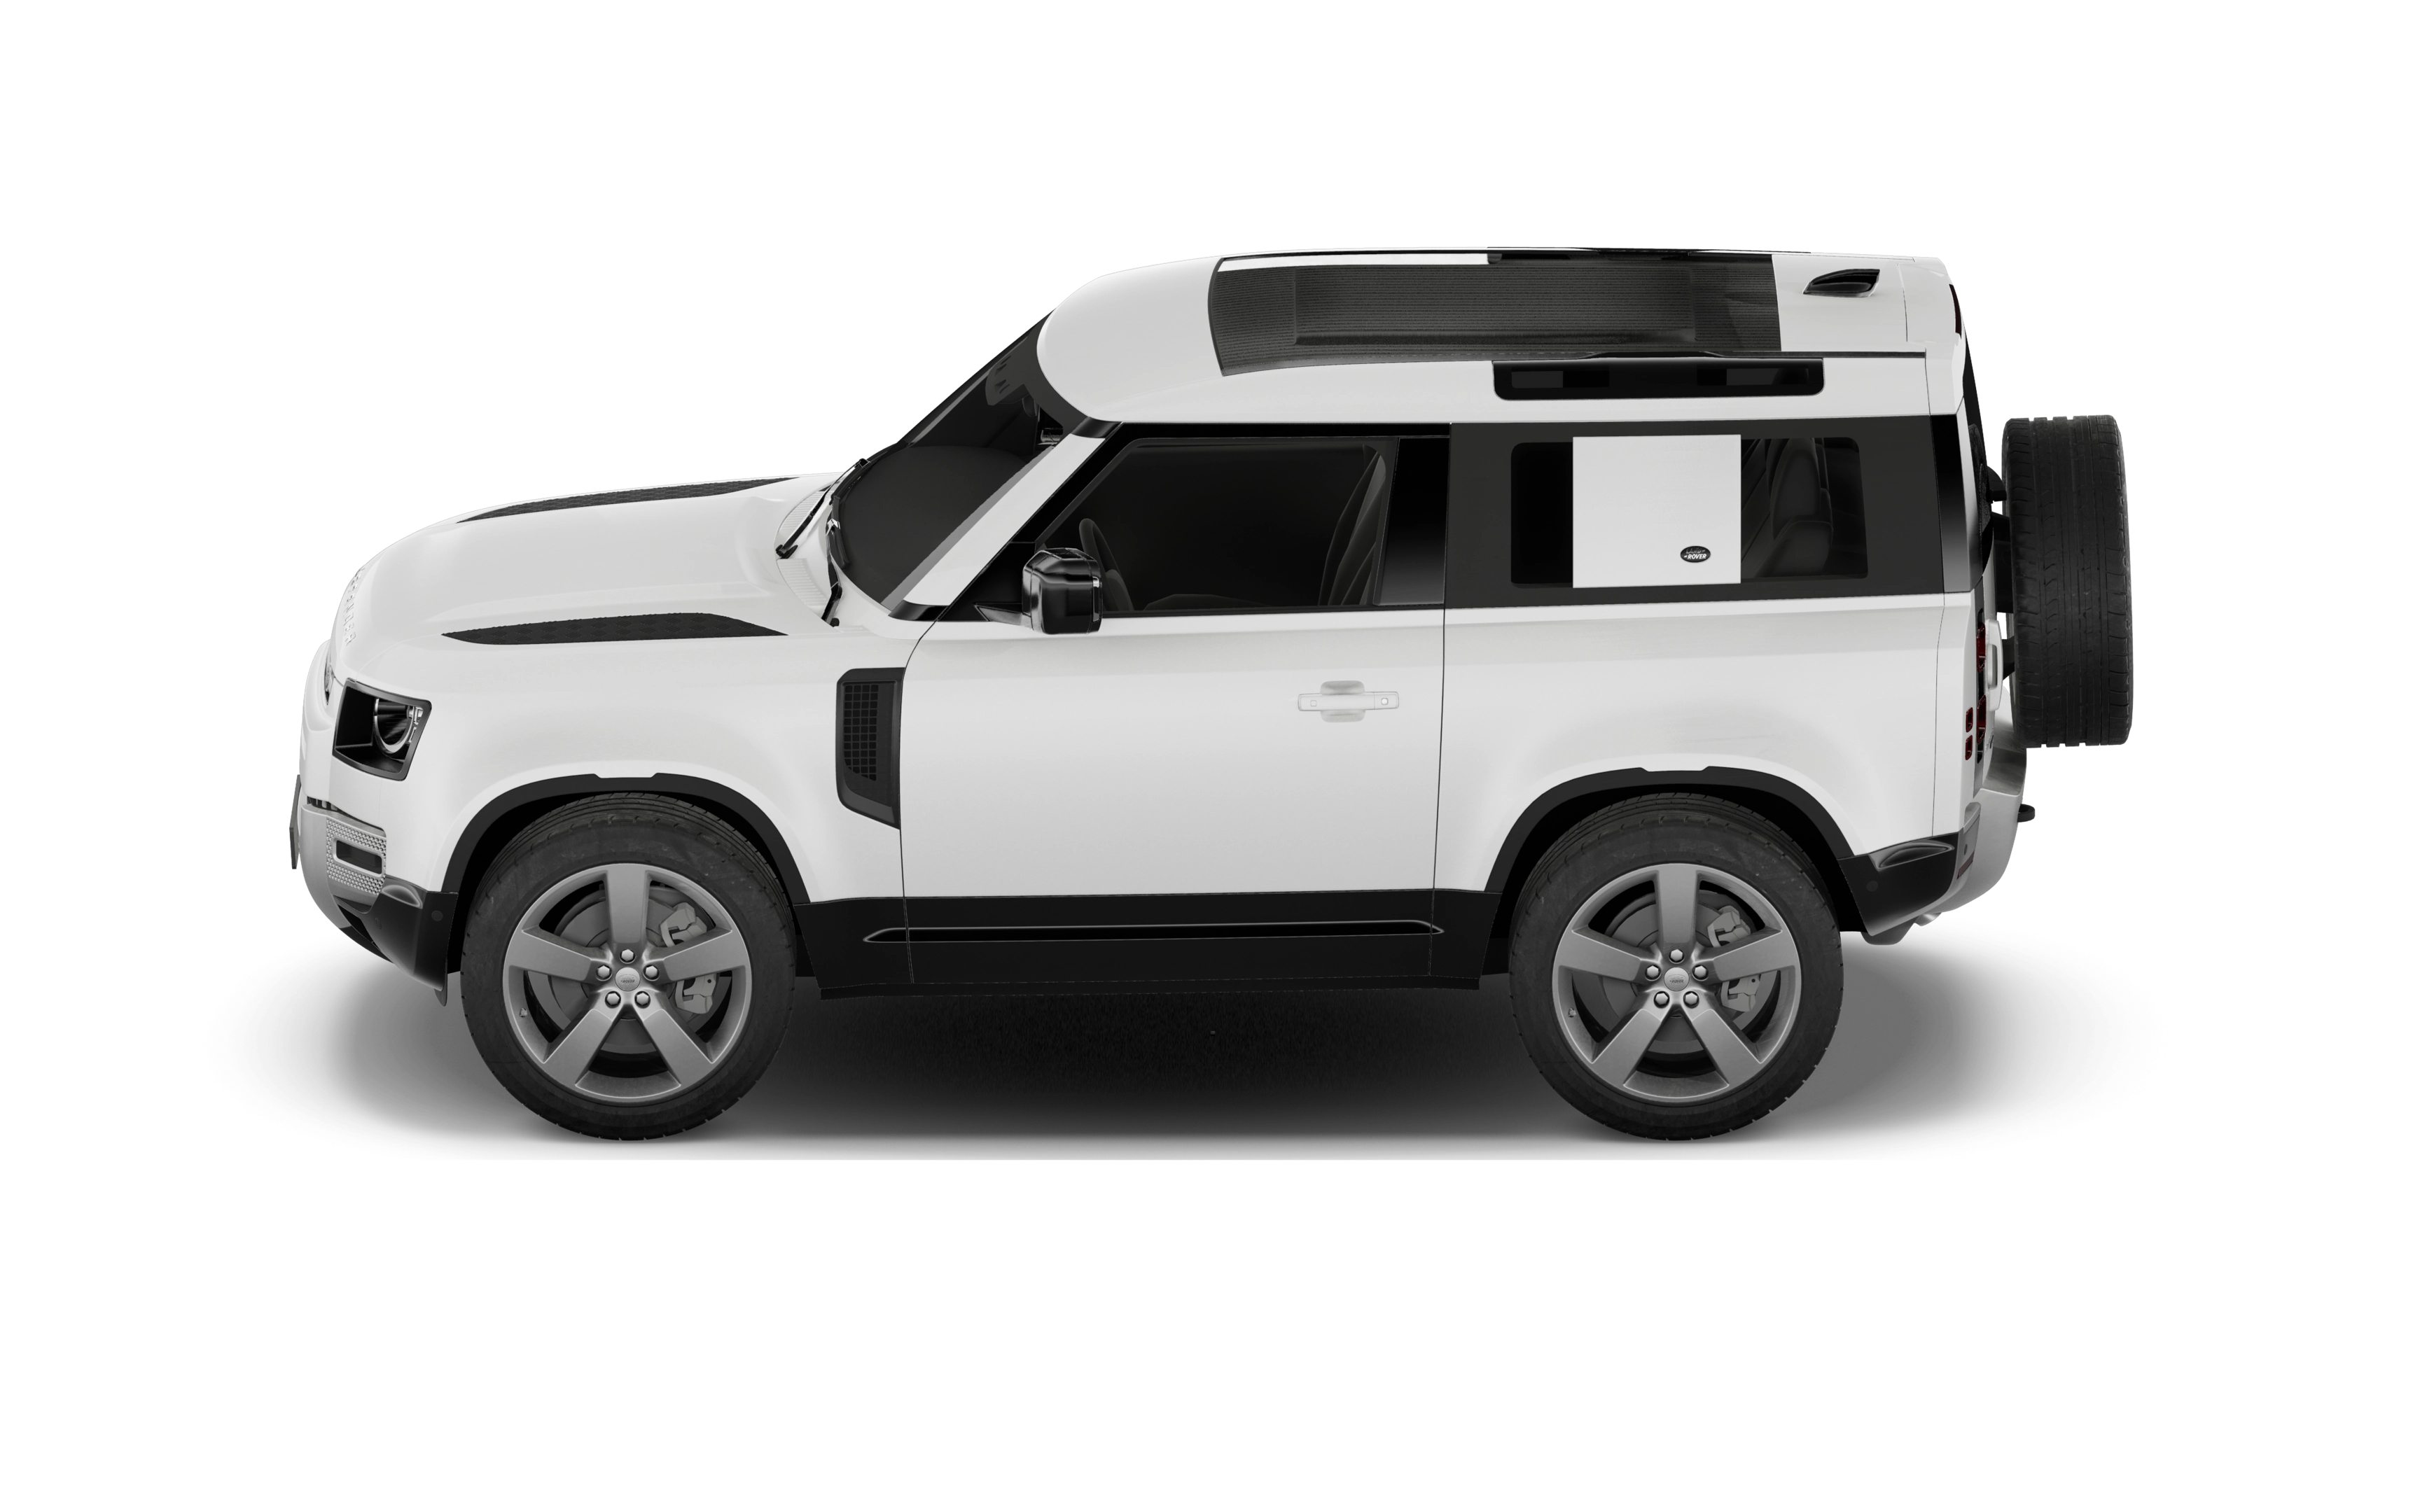 Land rover defender estate 3.0 d250 hse 110 5 doors auto [7 seat]